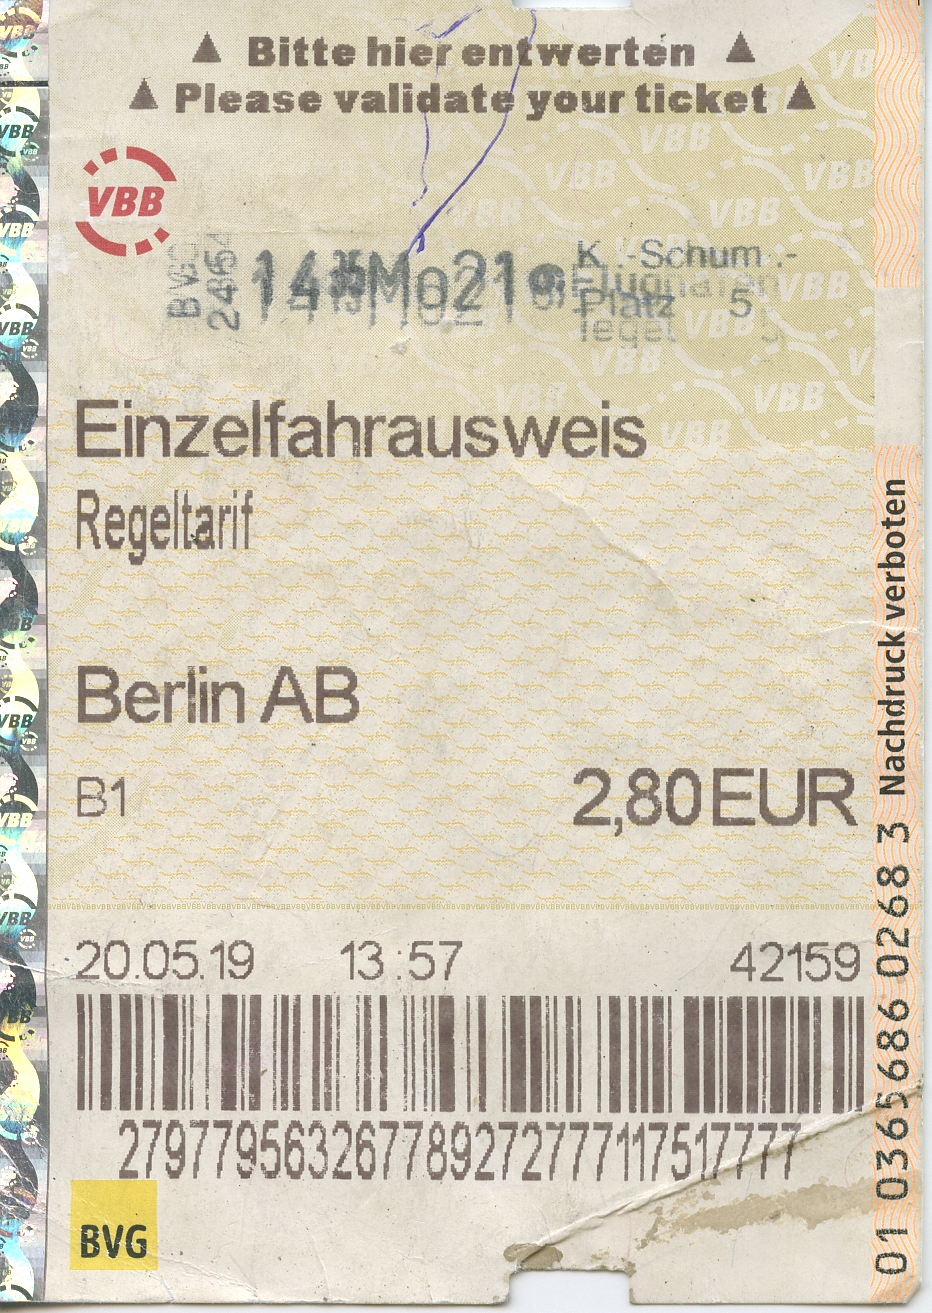 Berlin Subway Ticket